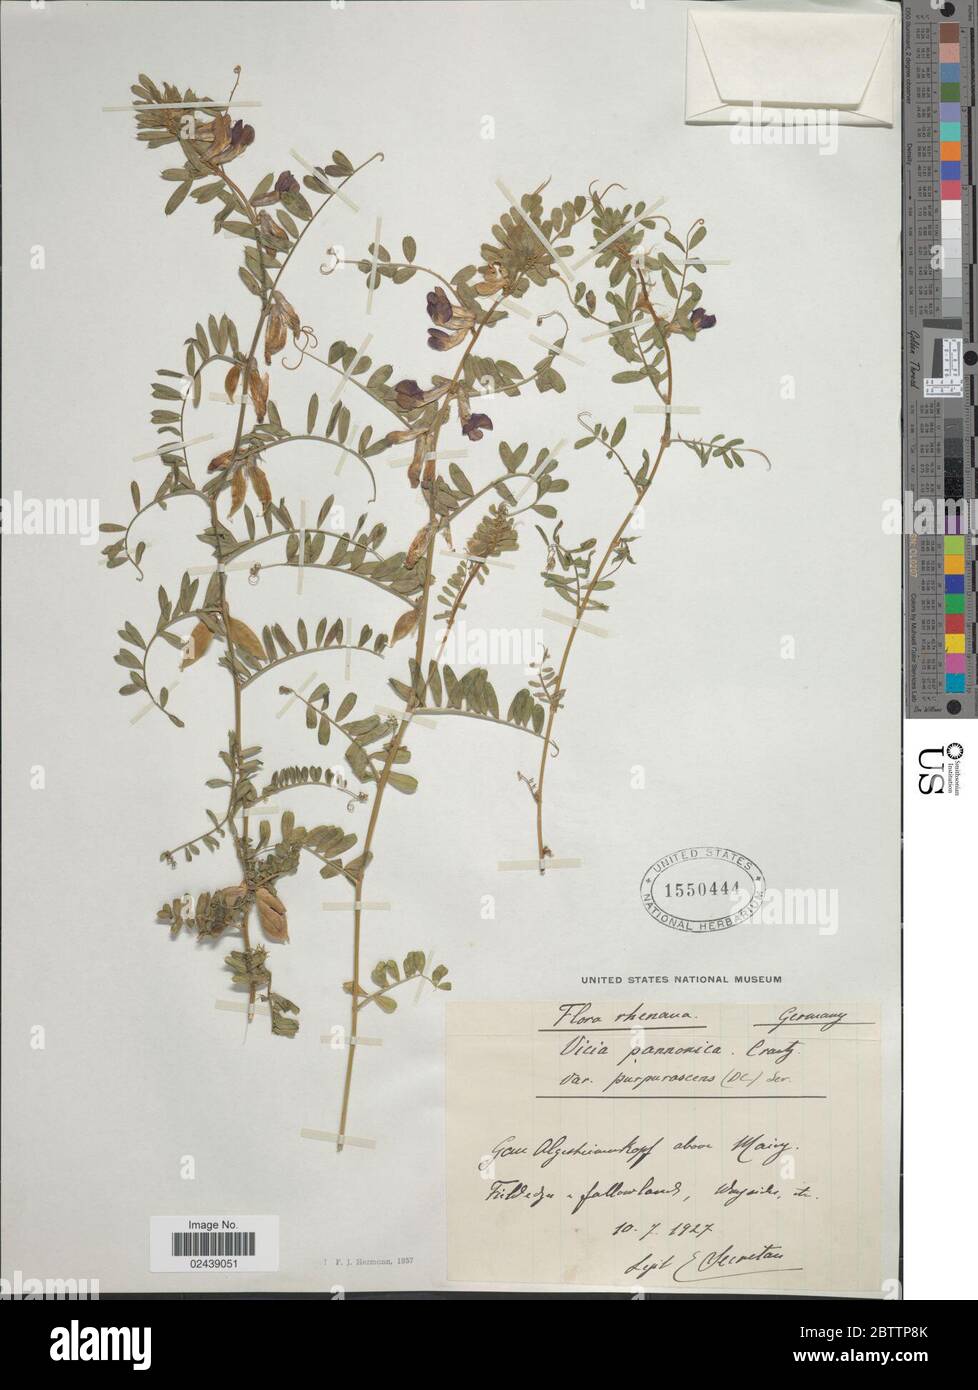 Vicia pannonica Crantz. Stock Photo